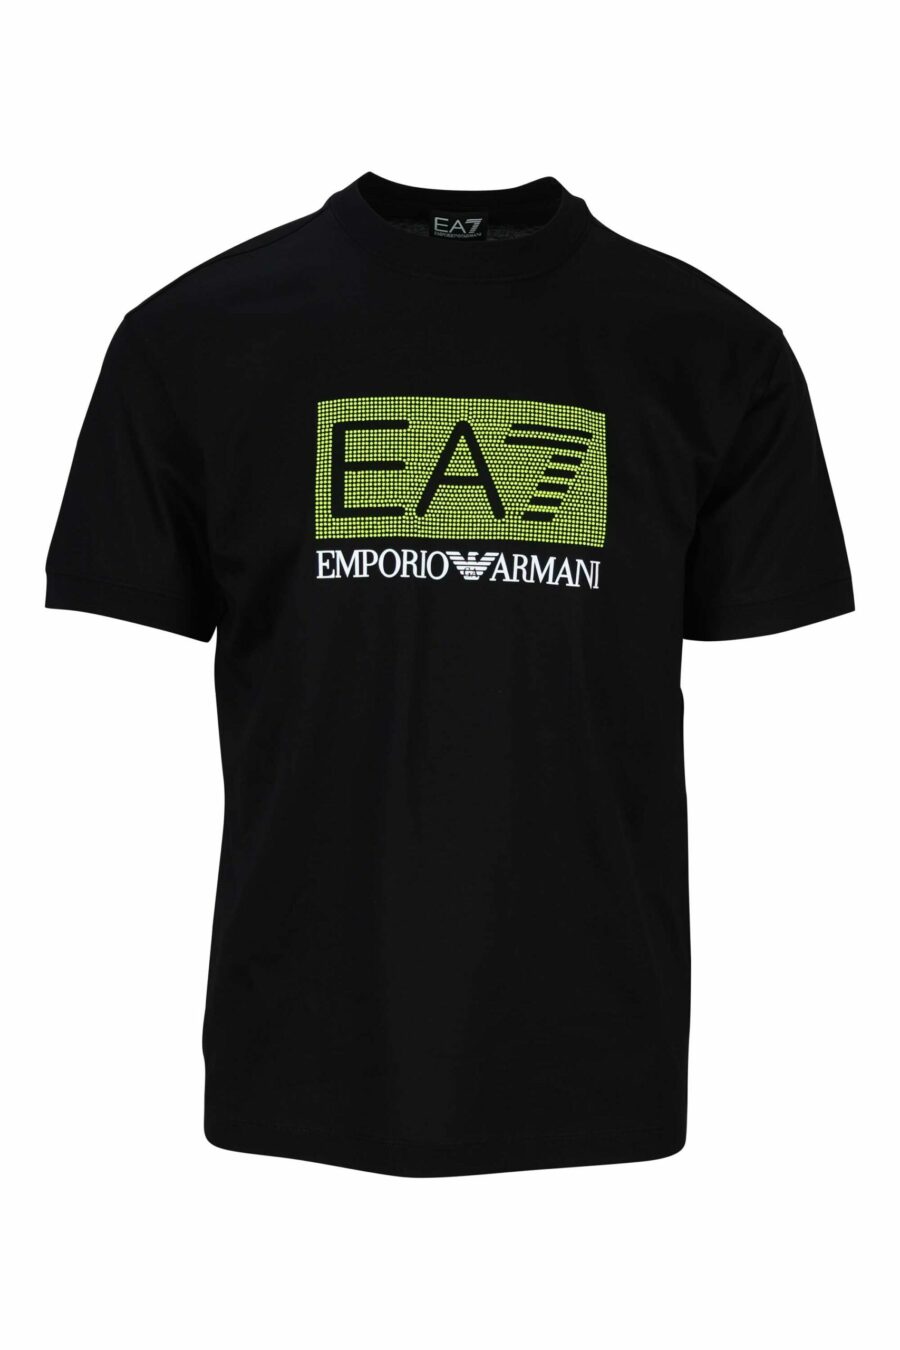 Schwarzes T-Shirt mit "lux identity" Maxilogo in grünem Quadrat - 8058947495726 skaliert